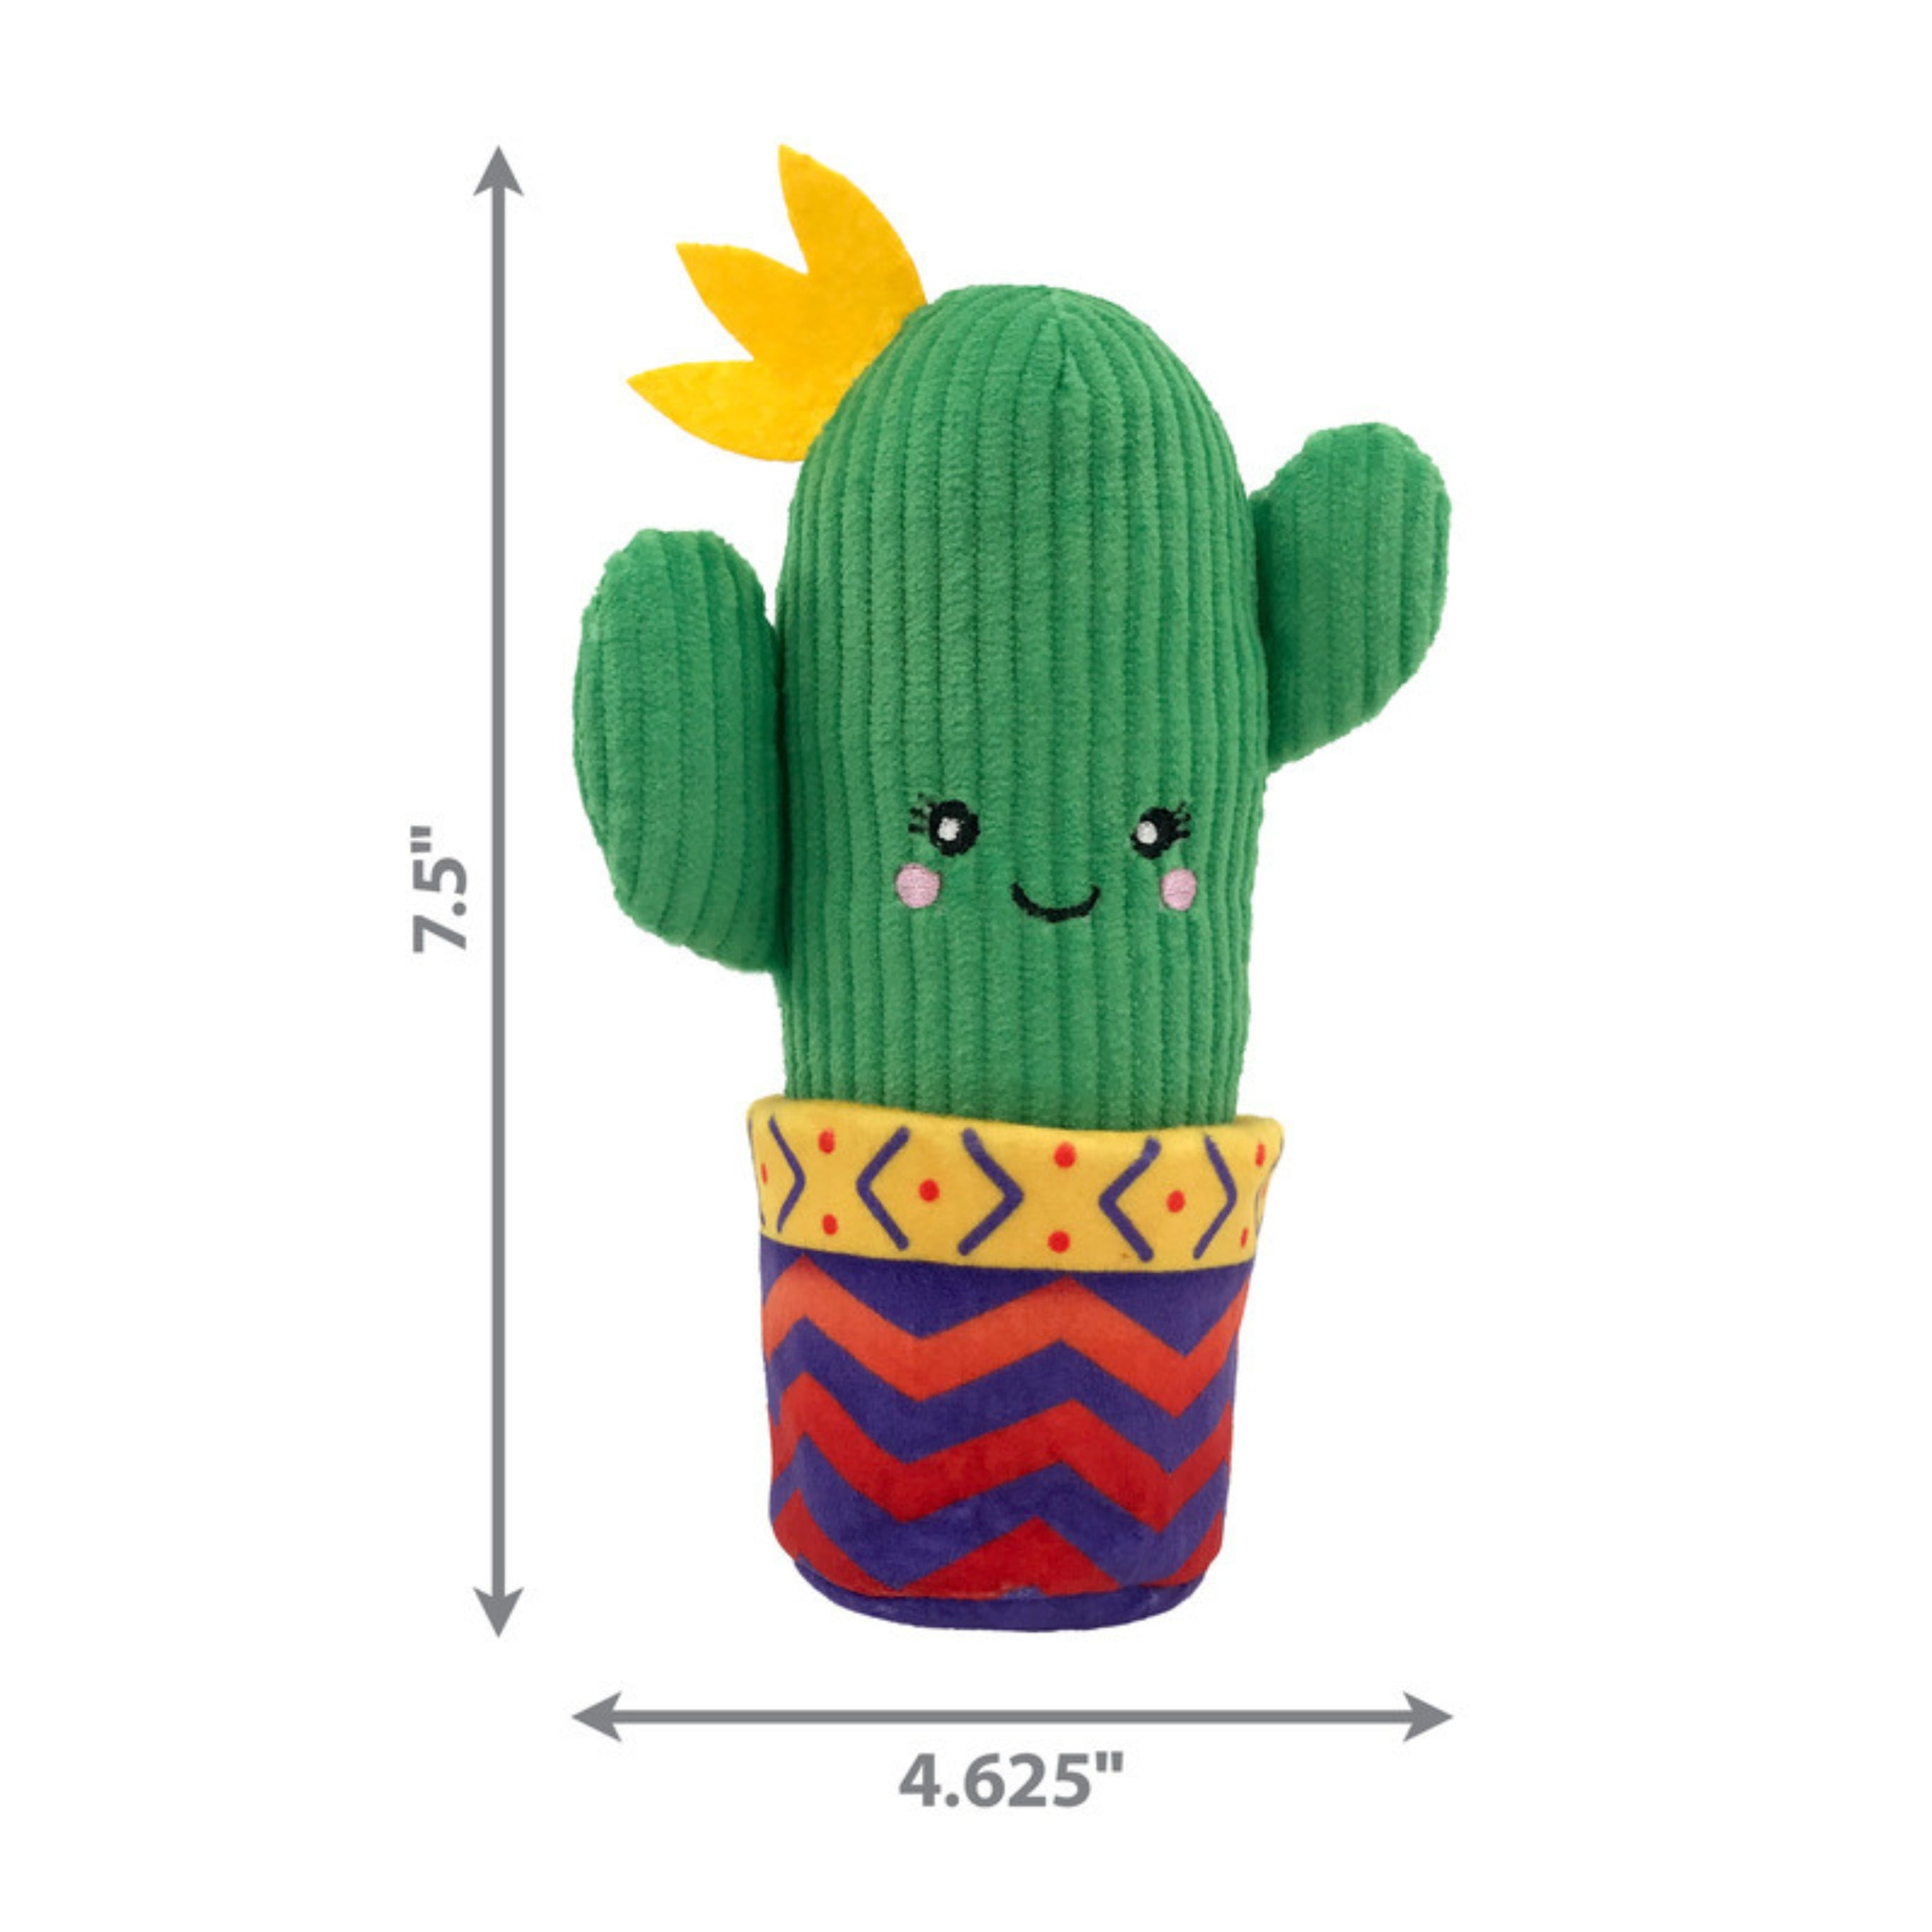 KONG Wrangler Cactus Cat Toy - Dimensions.